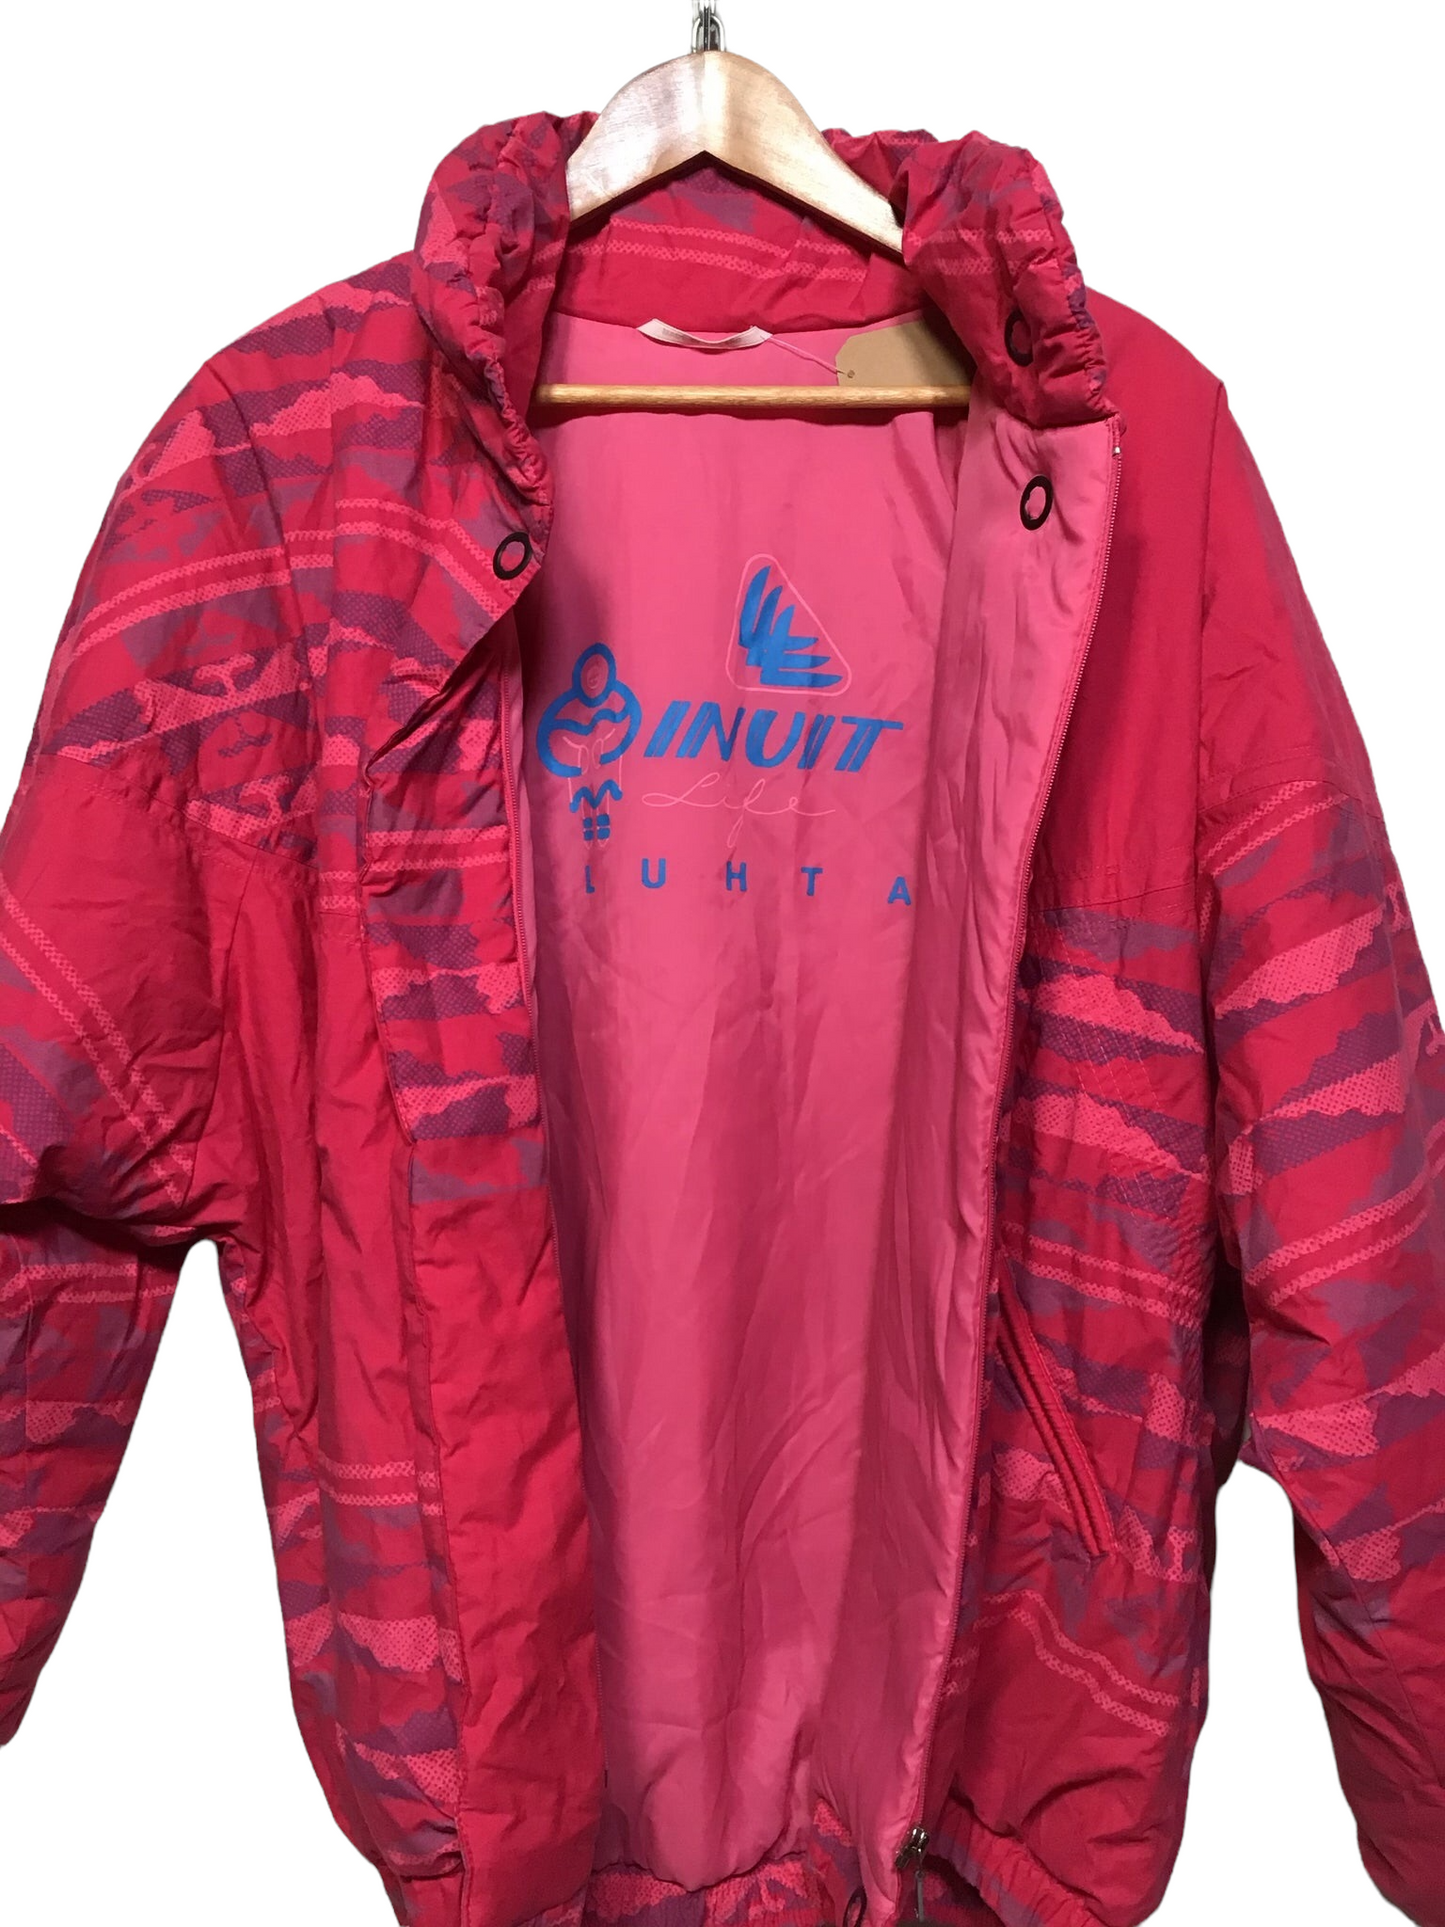 Inuit Ski Coat (Size L)